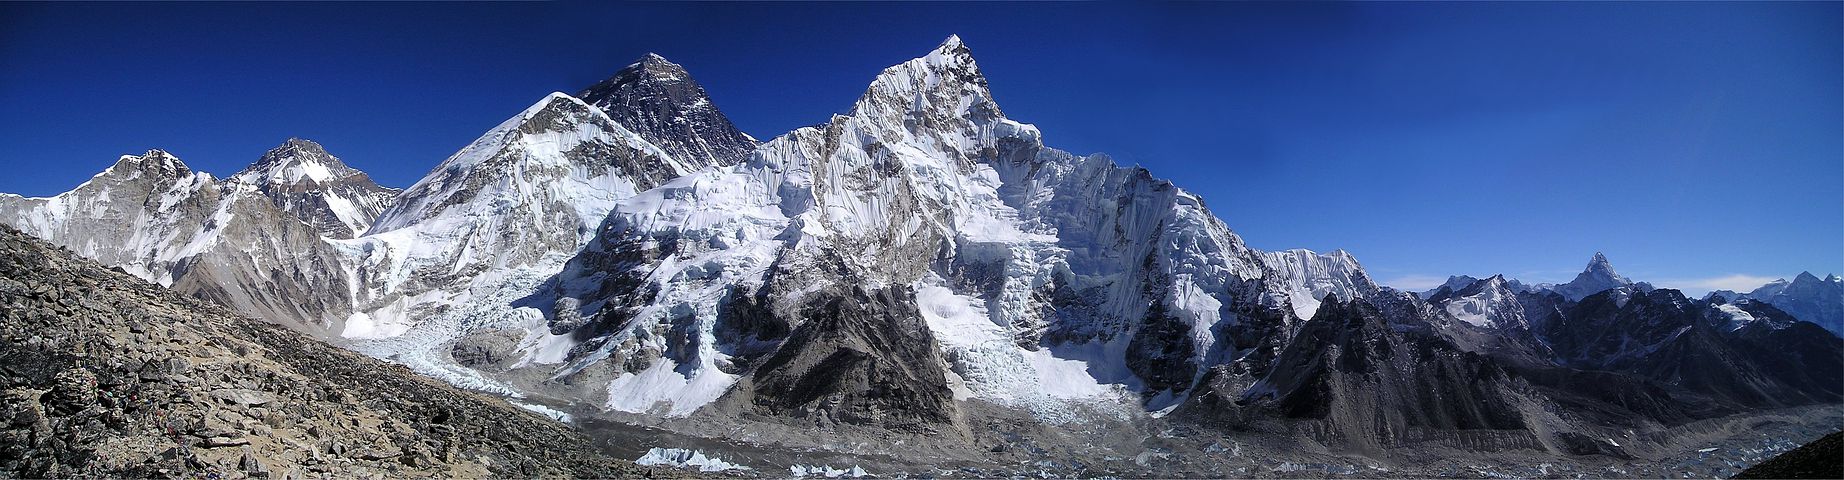 Mount Everest Image & Wallpaper in HD